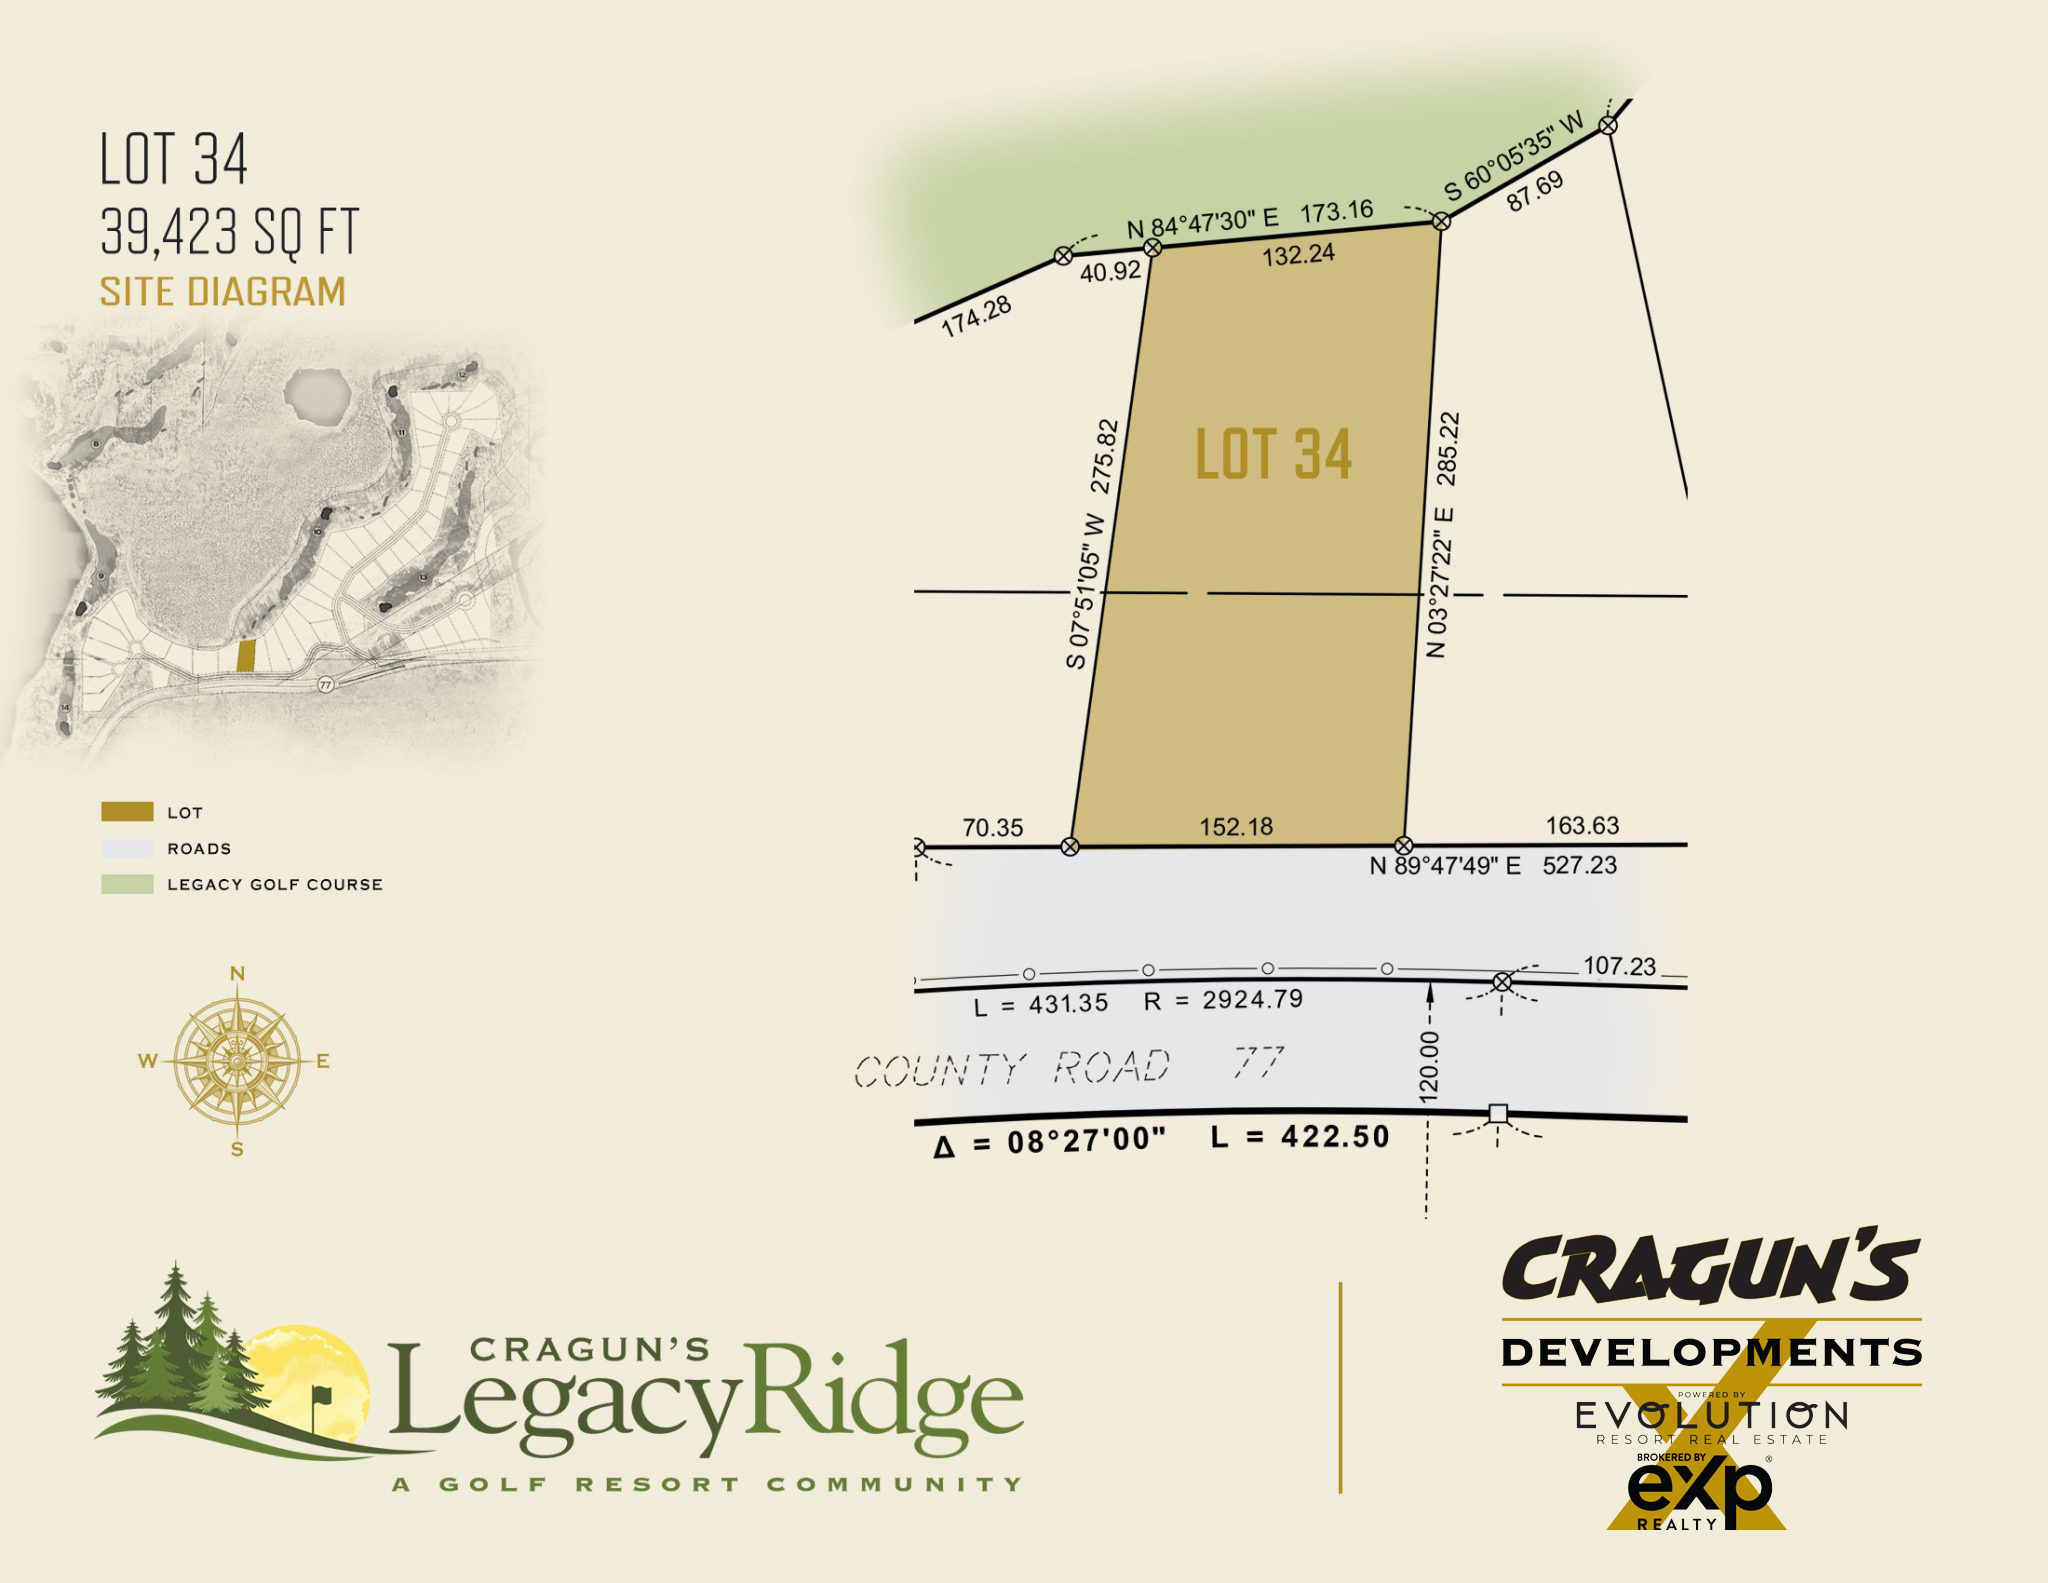 Legacy Ridge Lot 34 at Cragun's Developments in Brainerd, MN